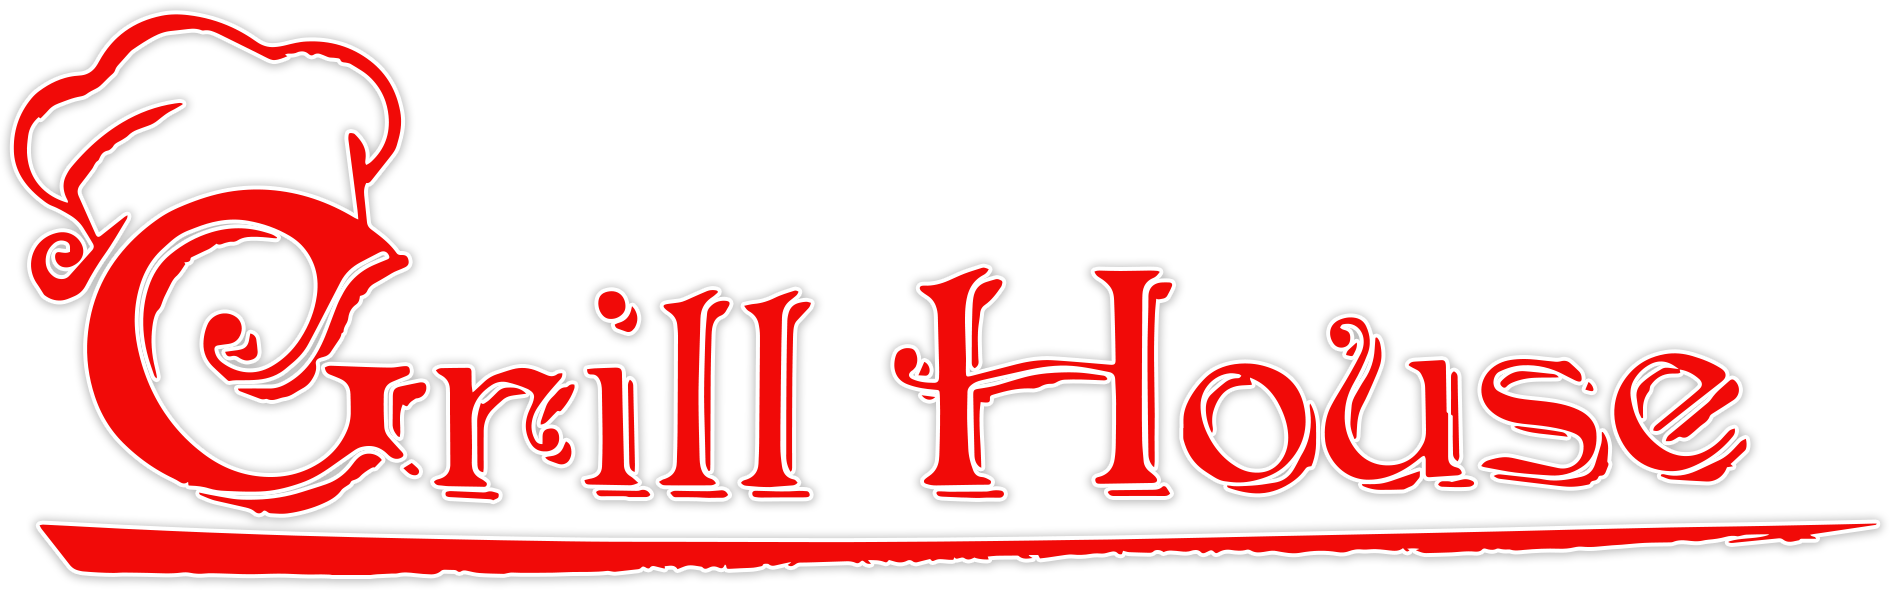 grillhouse_web_logo_red